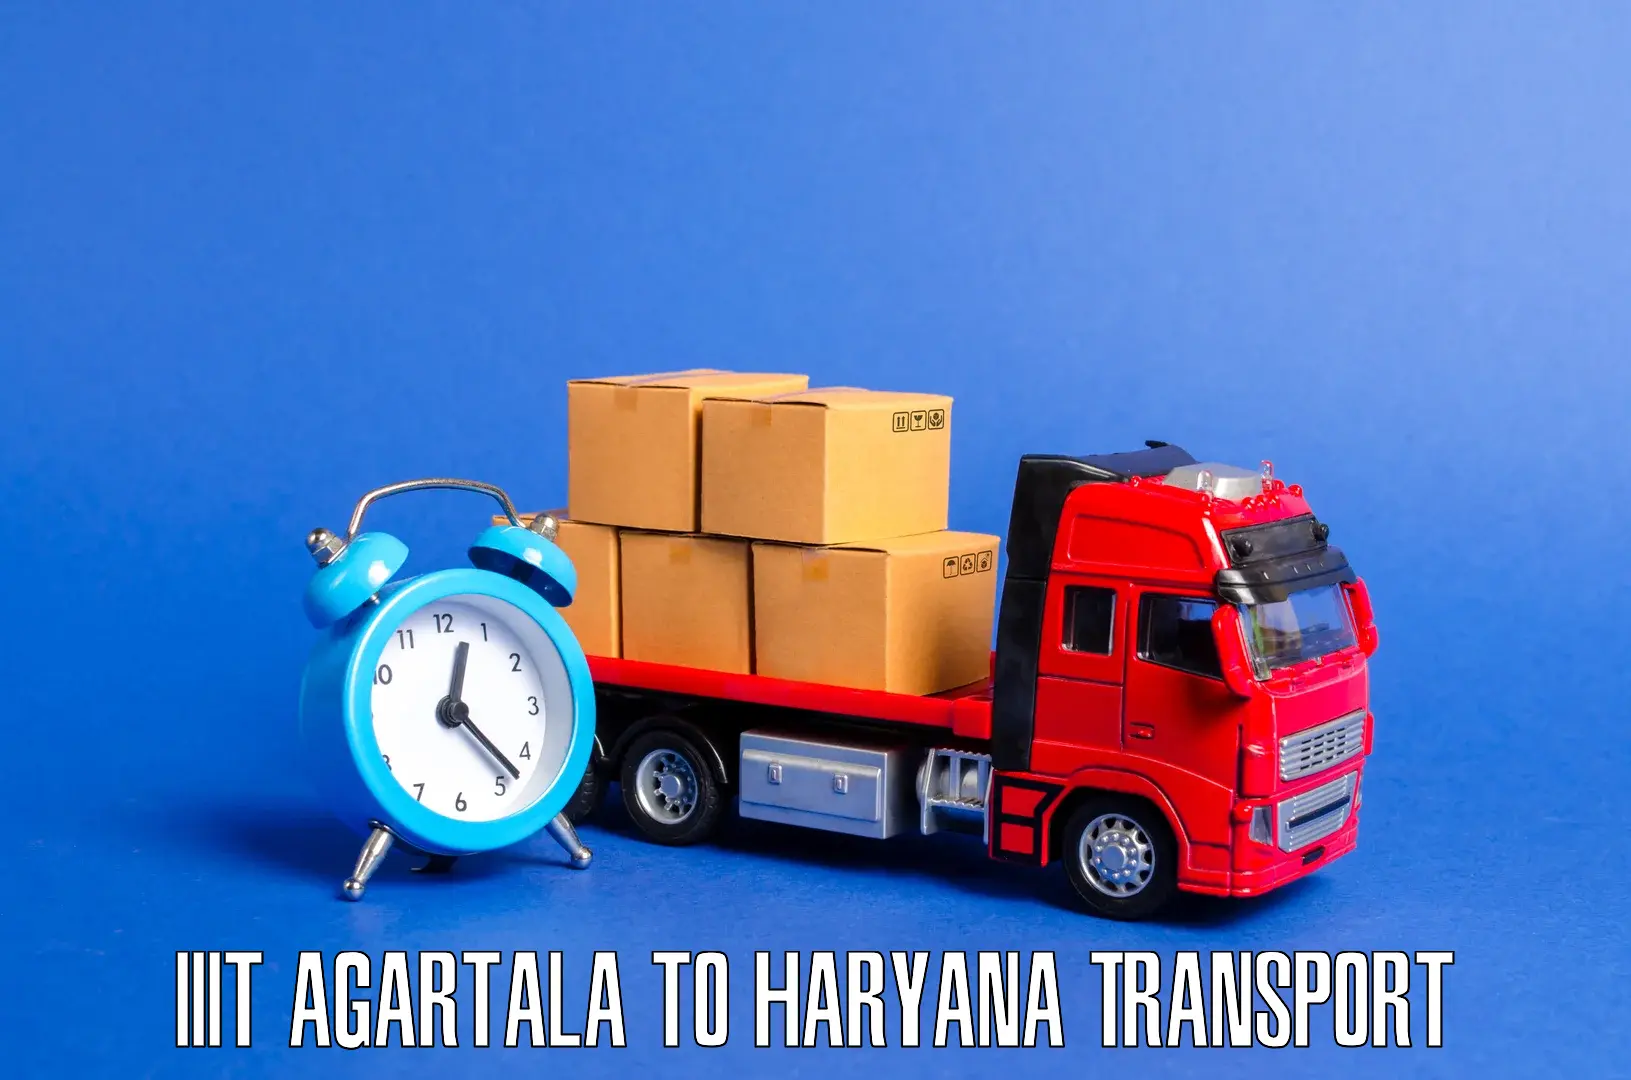 Express transport services in IIIT Agartala to Mahendragarh